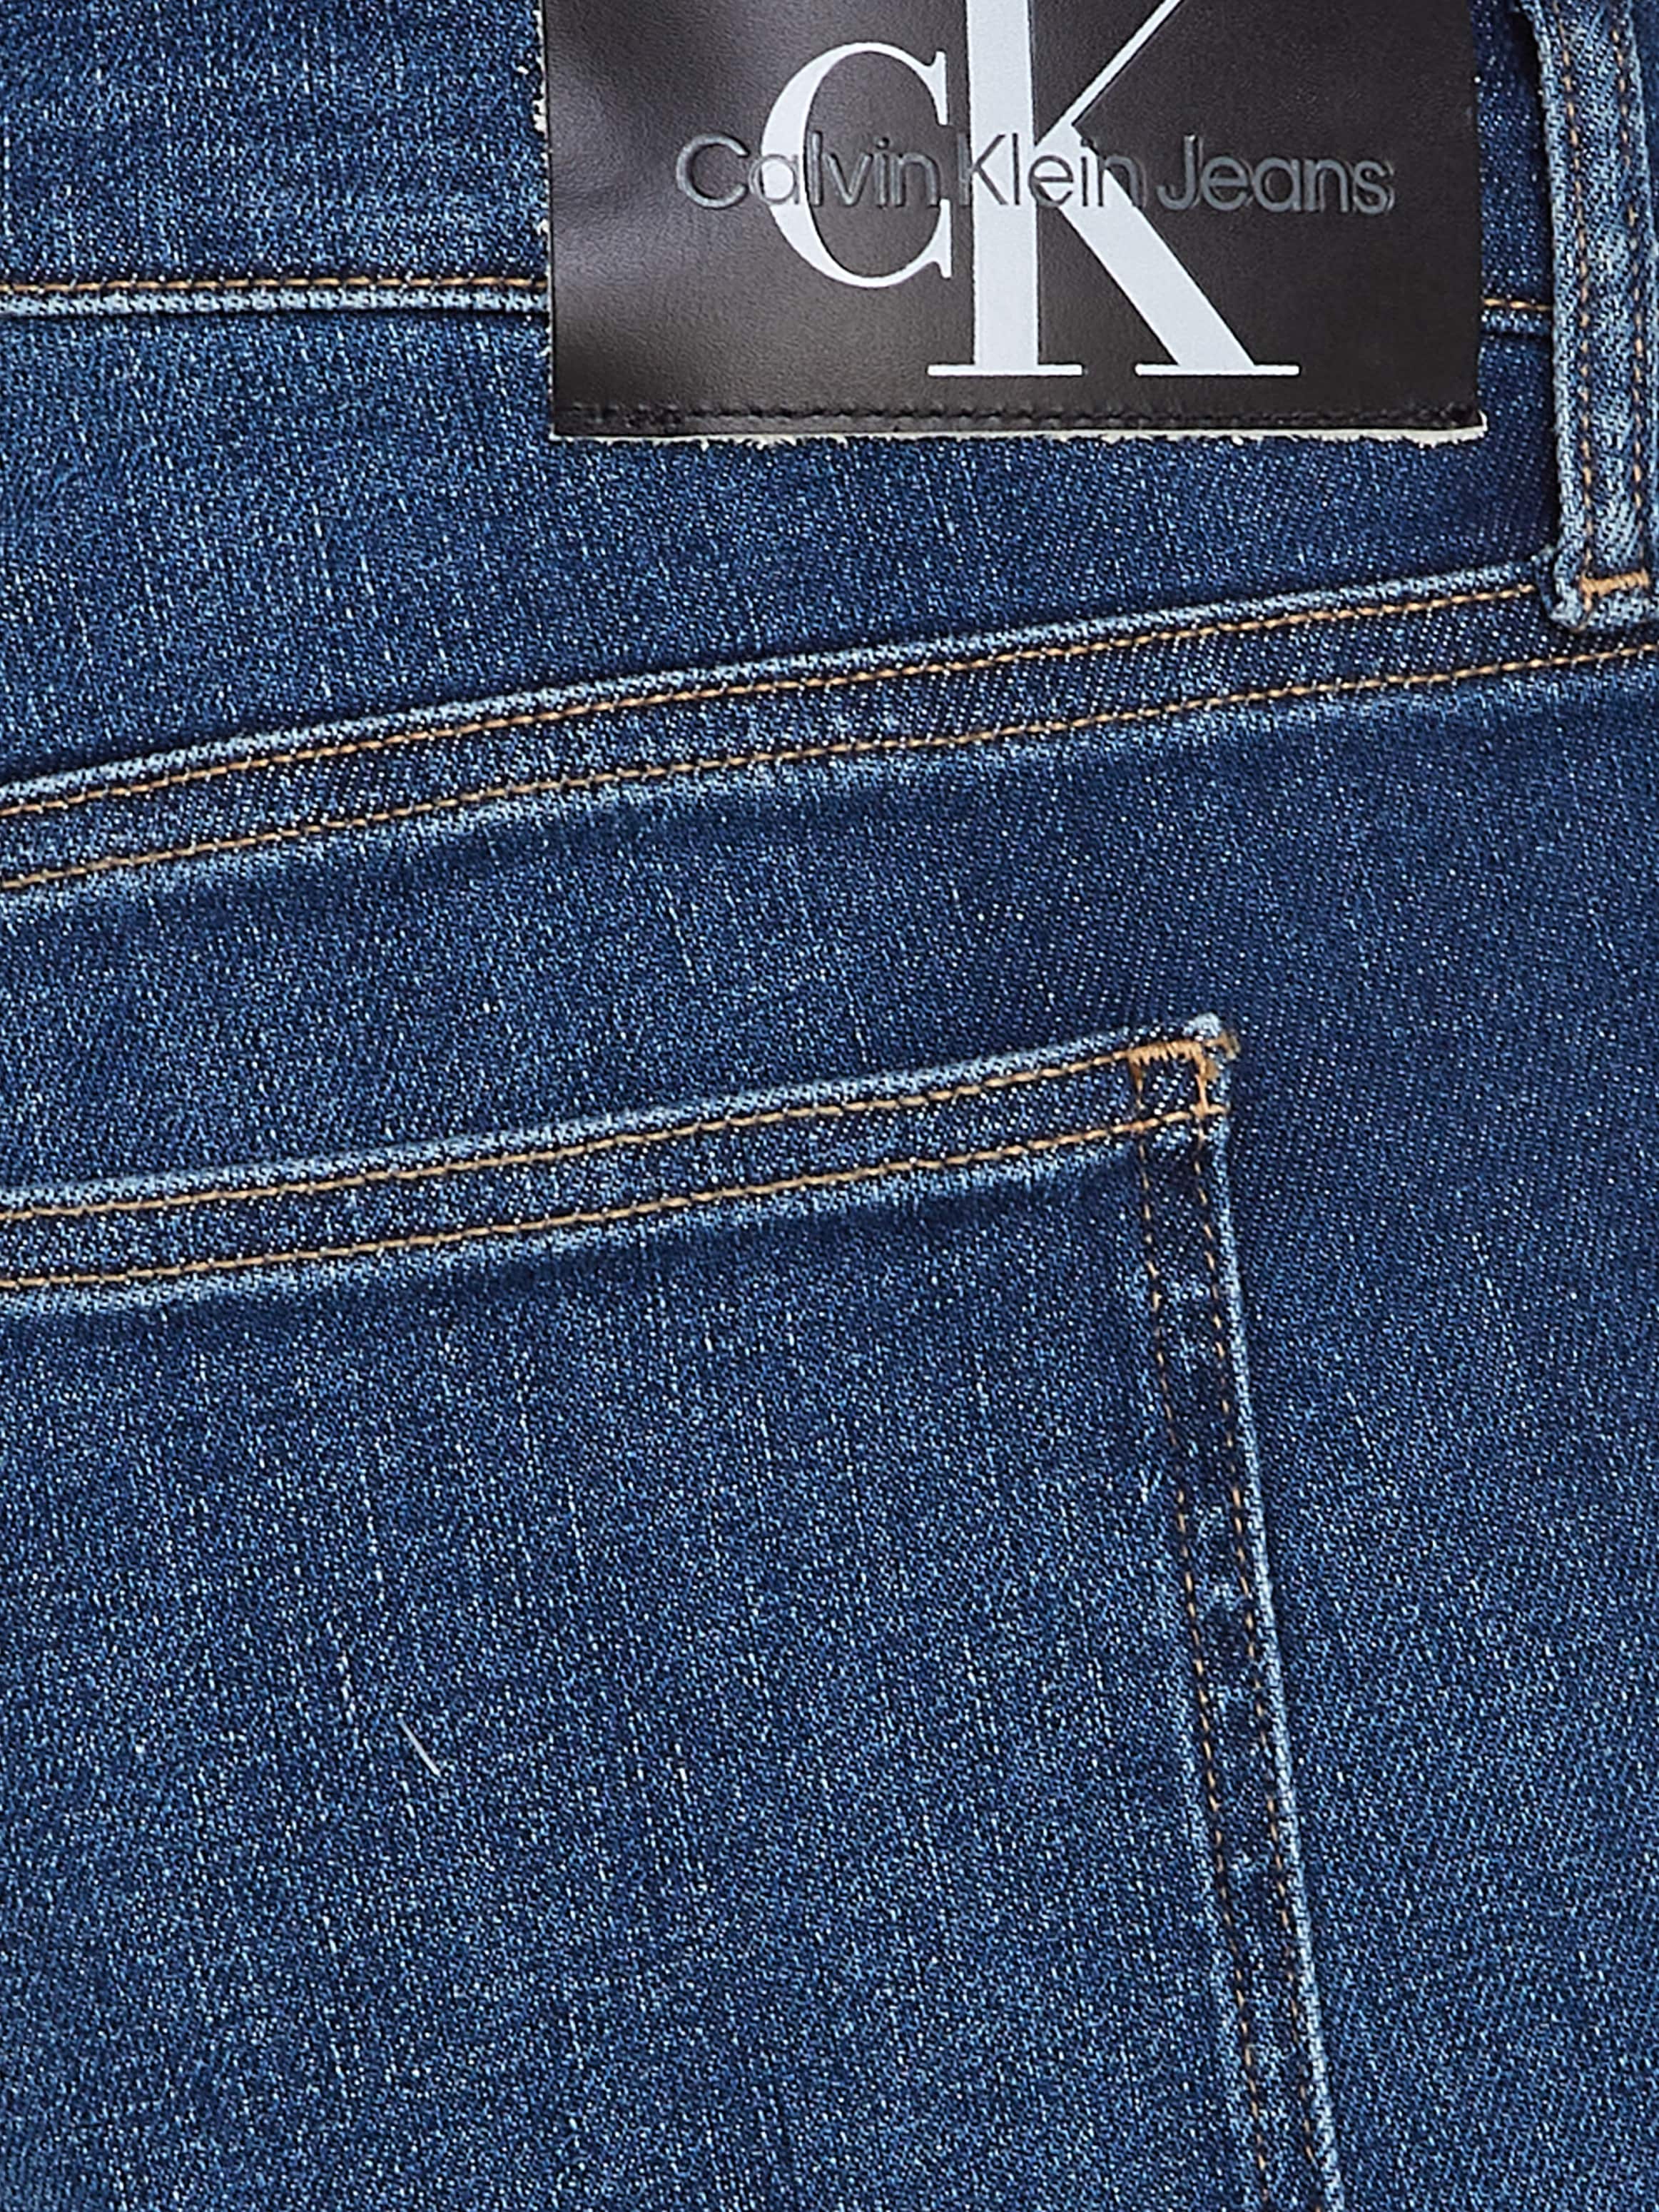 ♕ Plus angeboten Weiten »SKINNY Skinny-fit-Jeans Calvin Jeans in bei PLUS«, wird Klein Jeans